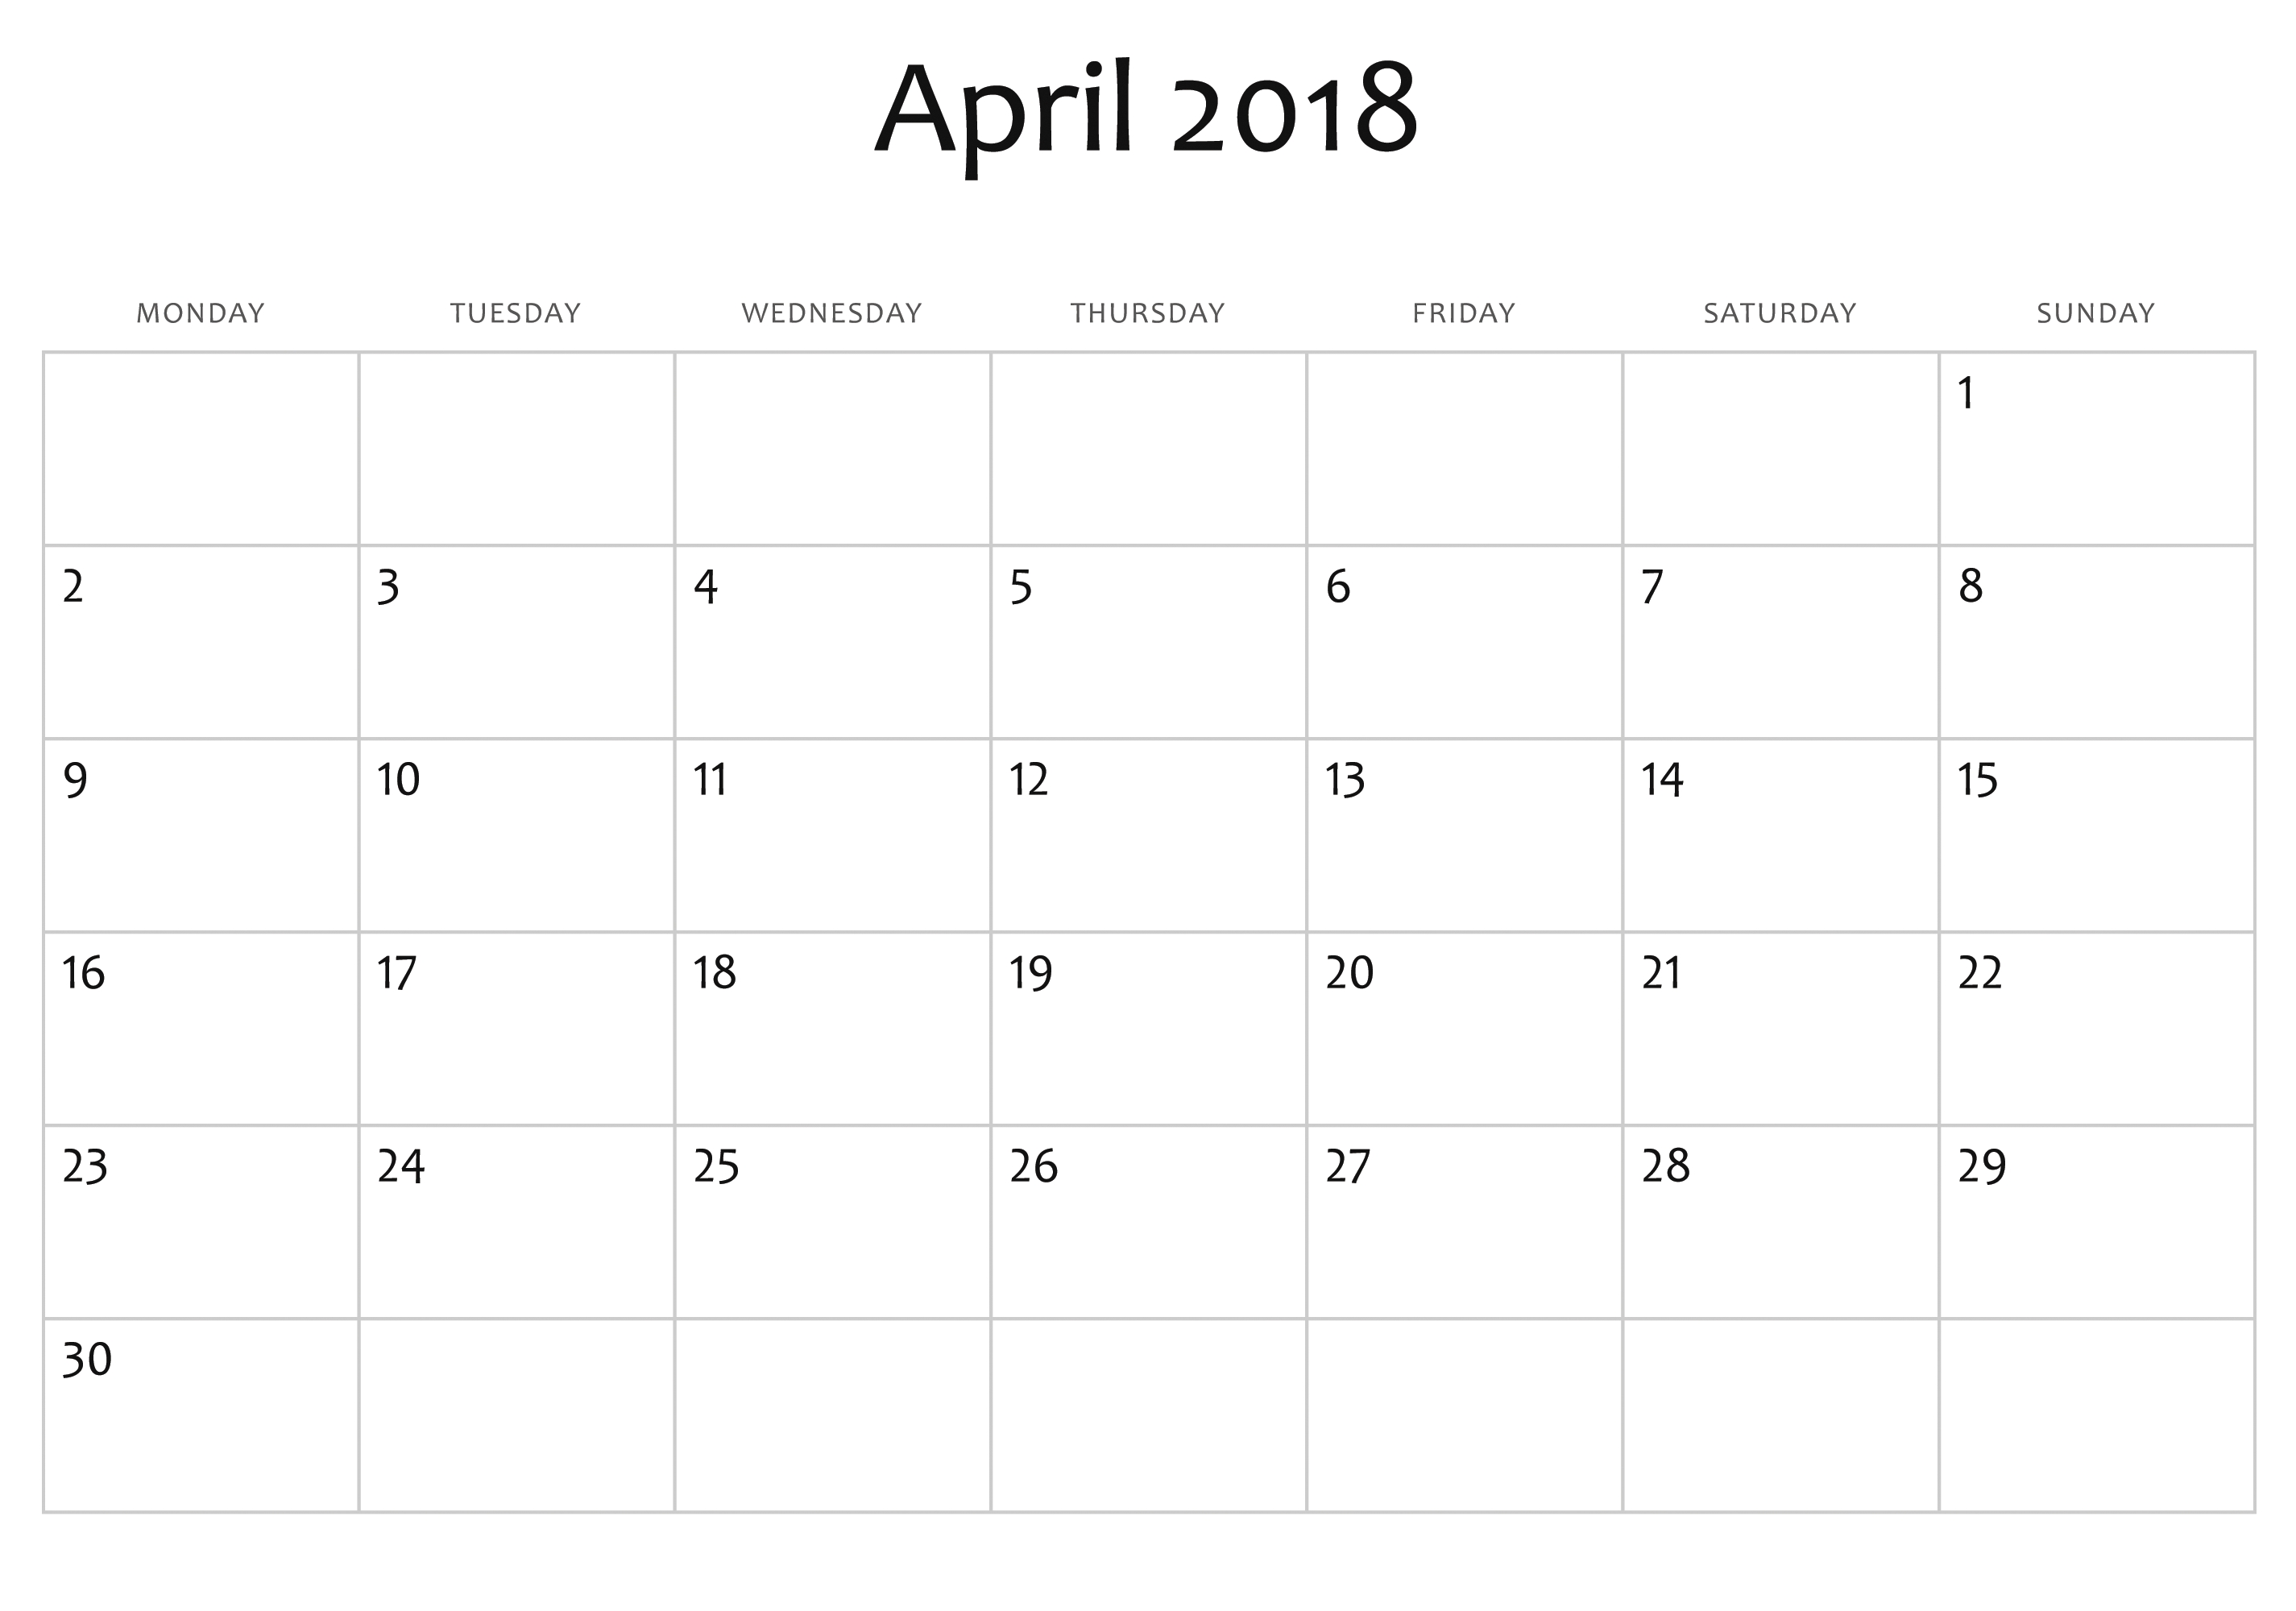 April 2018 Calendar Printable [Free] | Site Provides Printable Calendar In Word Format